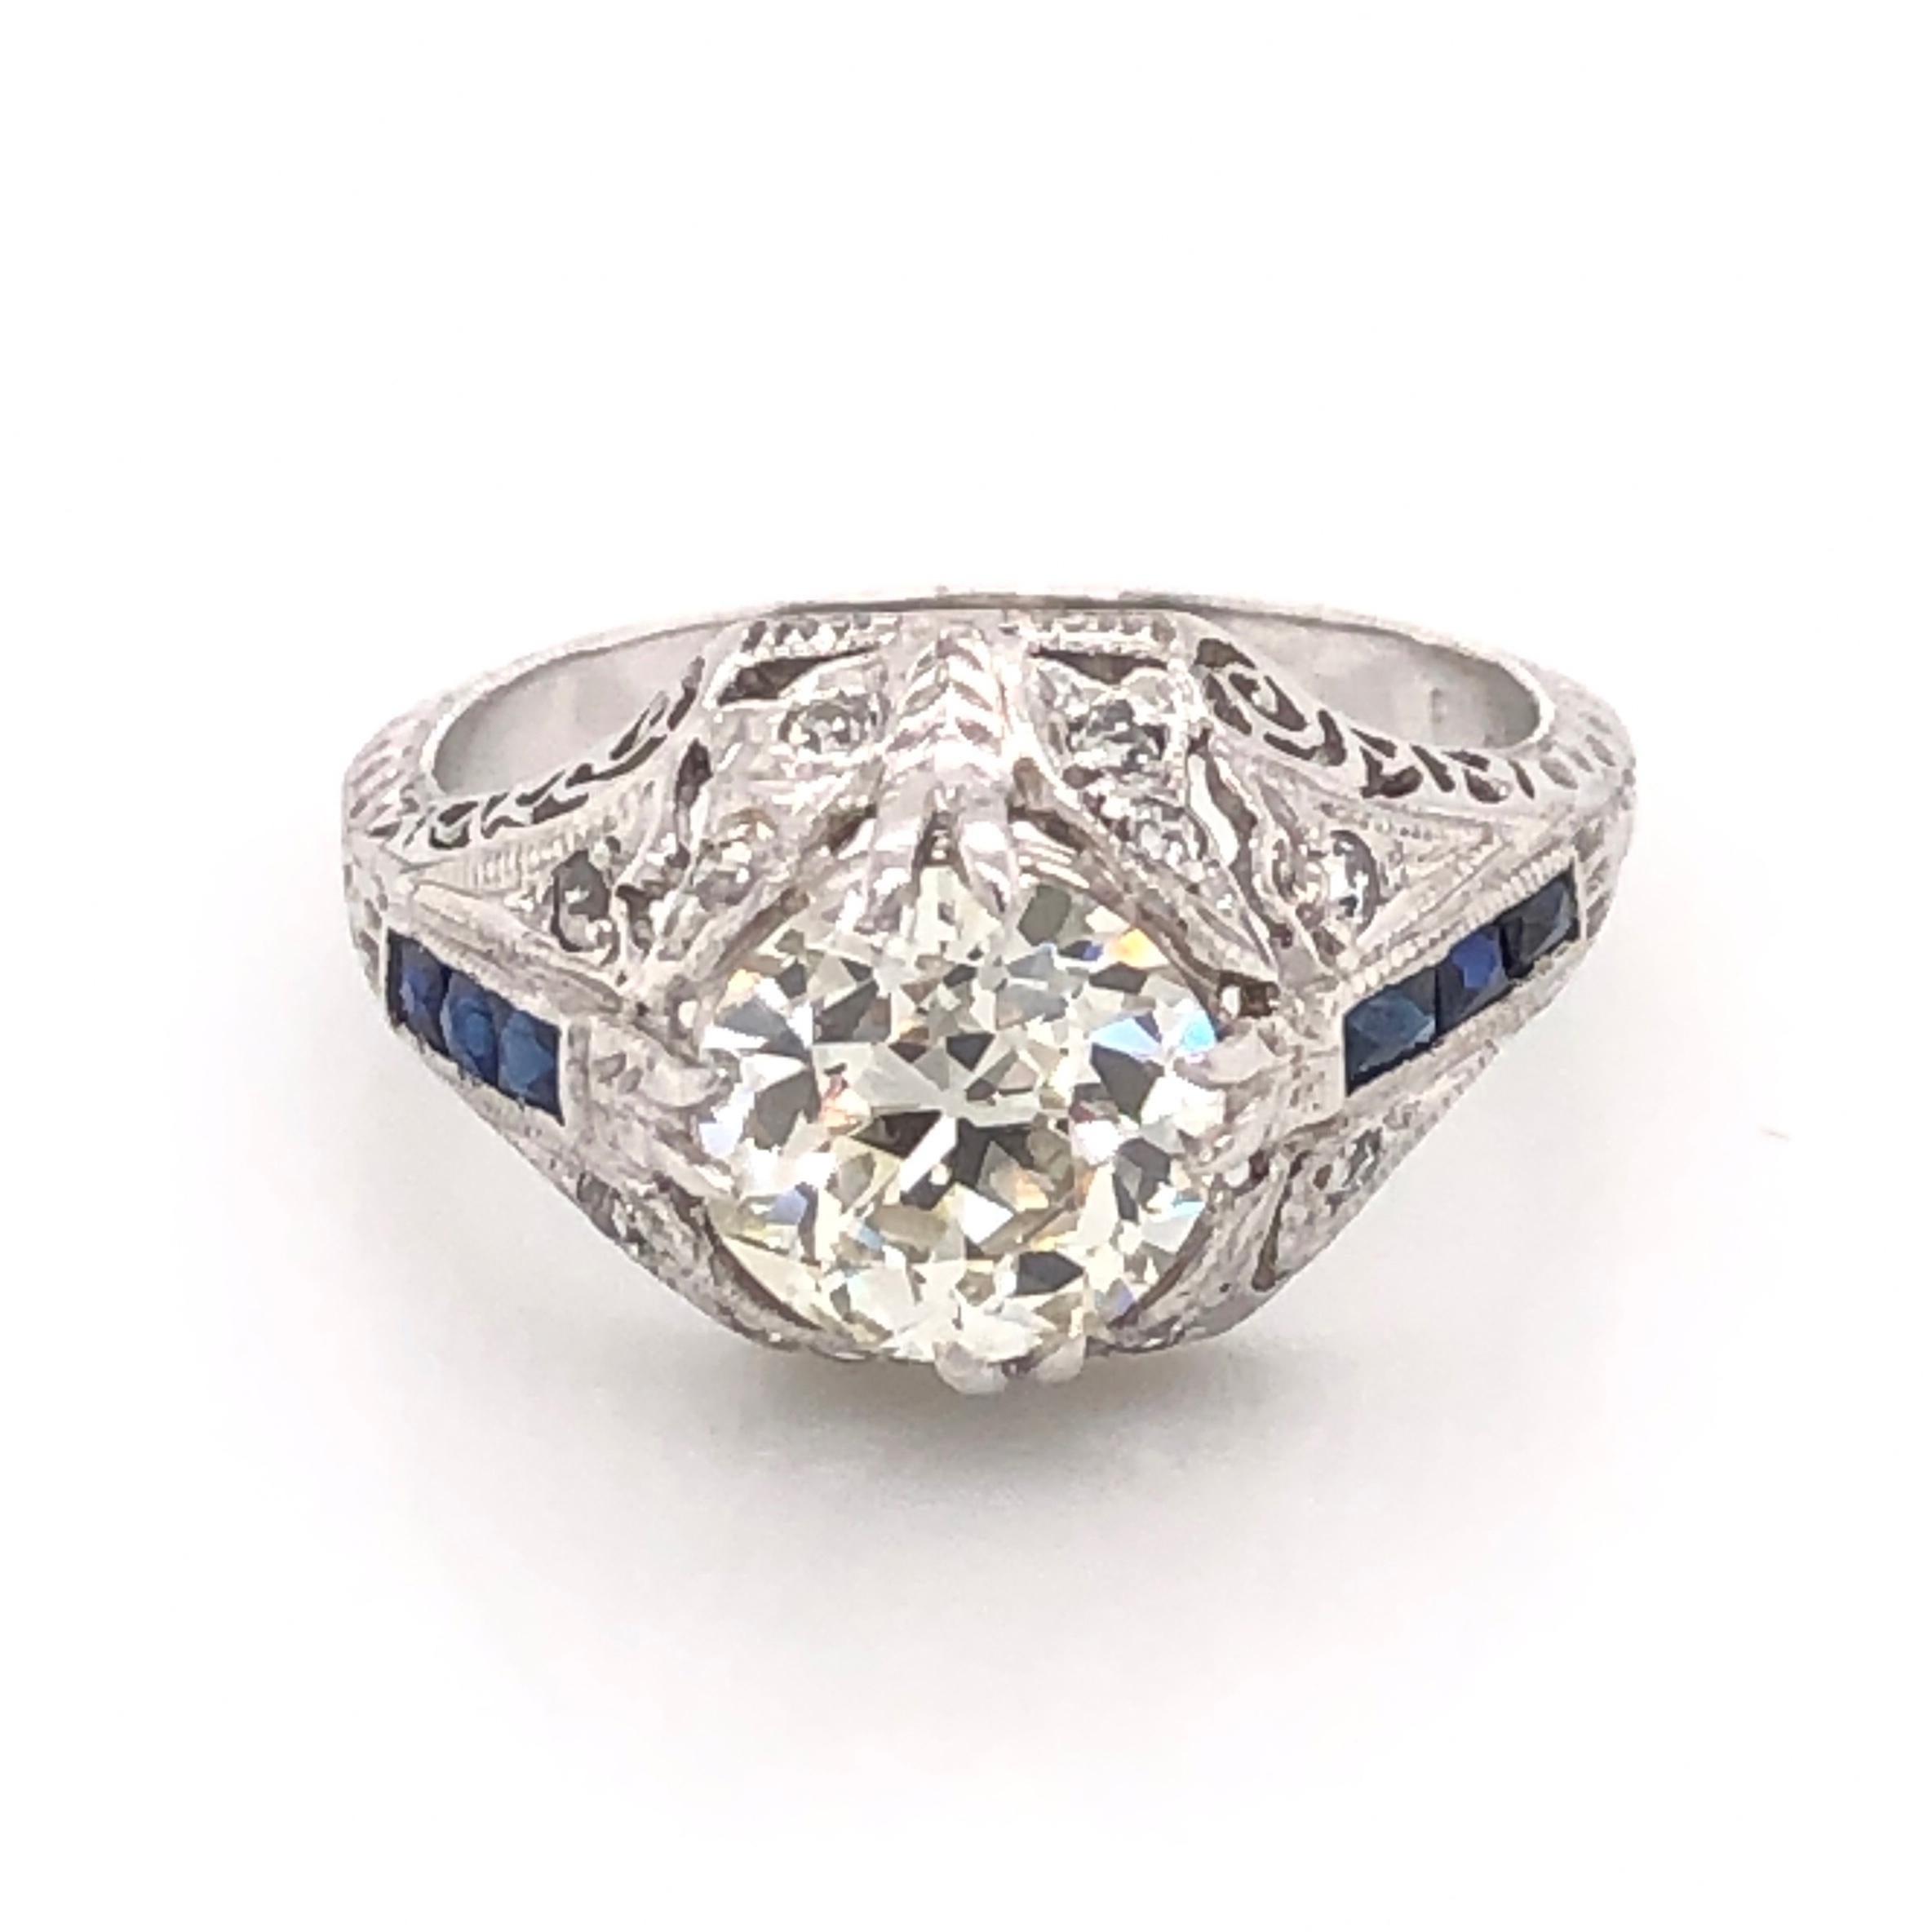 1.71 Carat Diamond Platinum Art Deco Style Cocktail Ring Fine Estate Jewelry 1